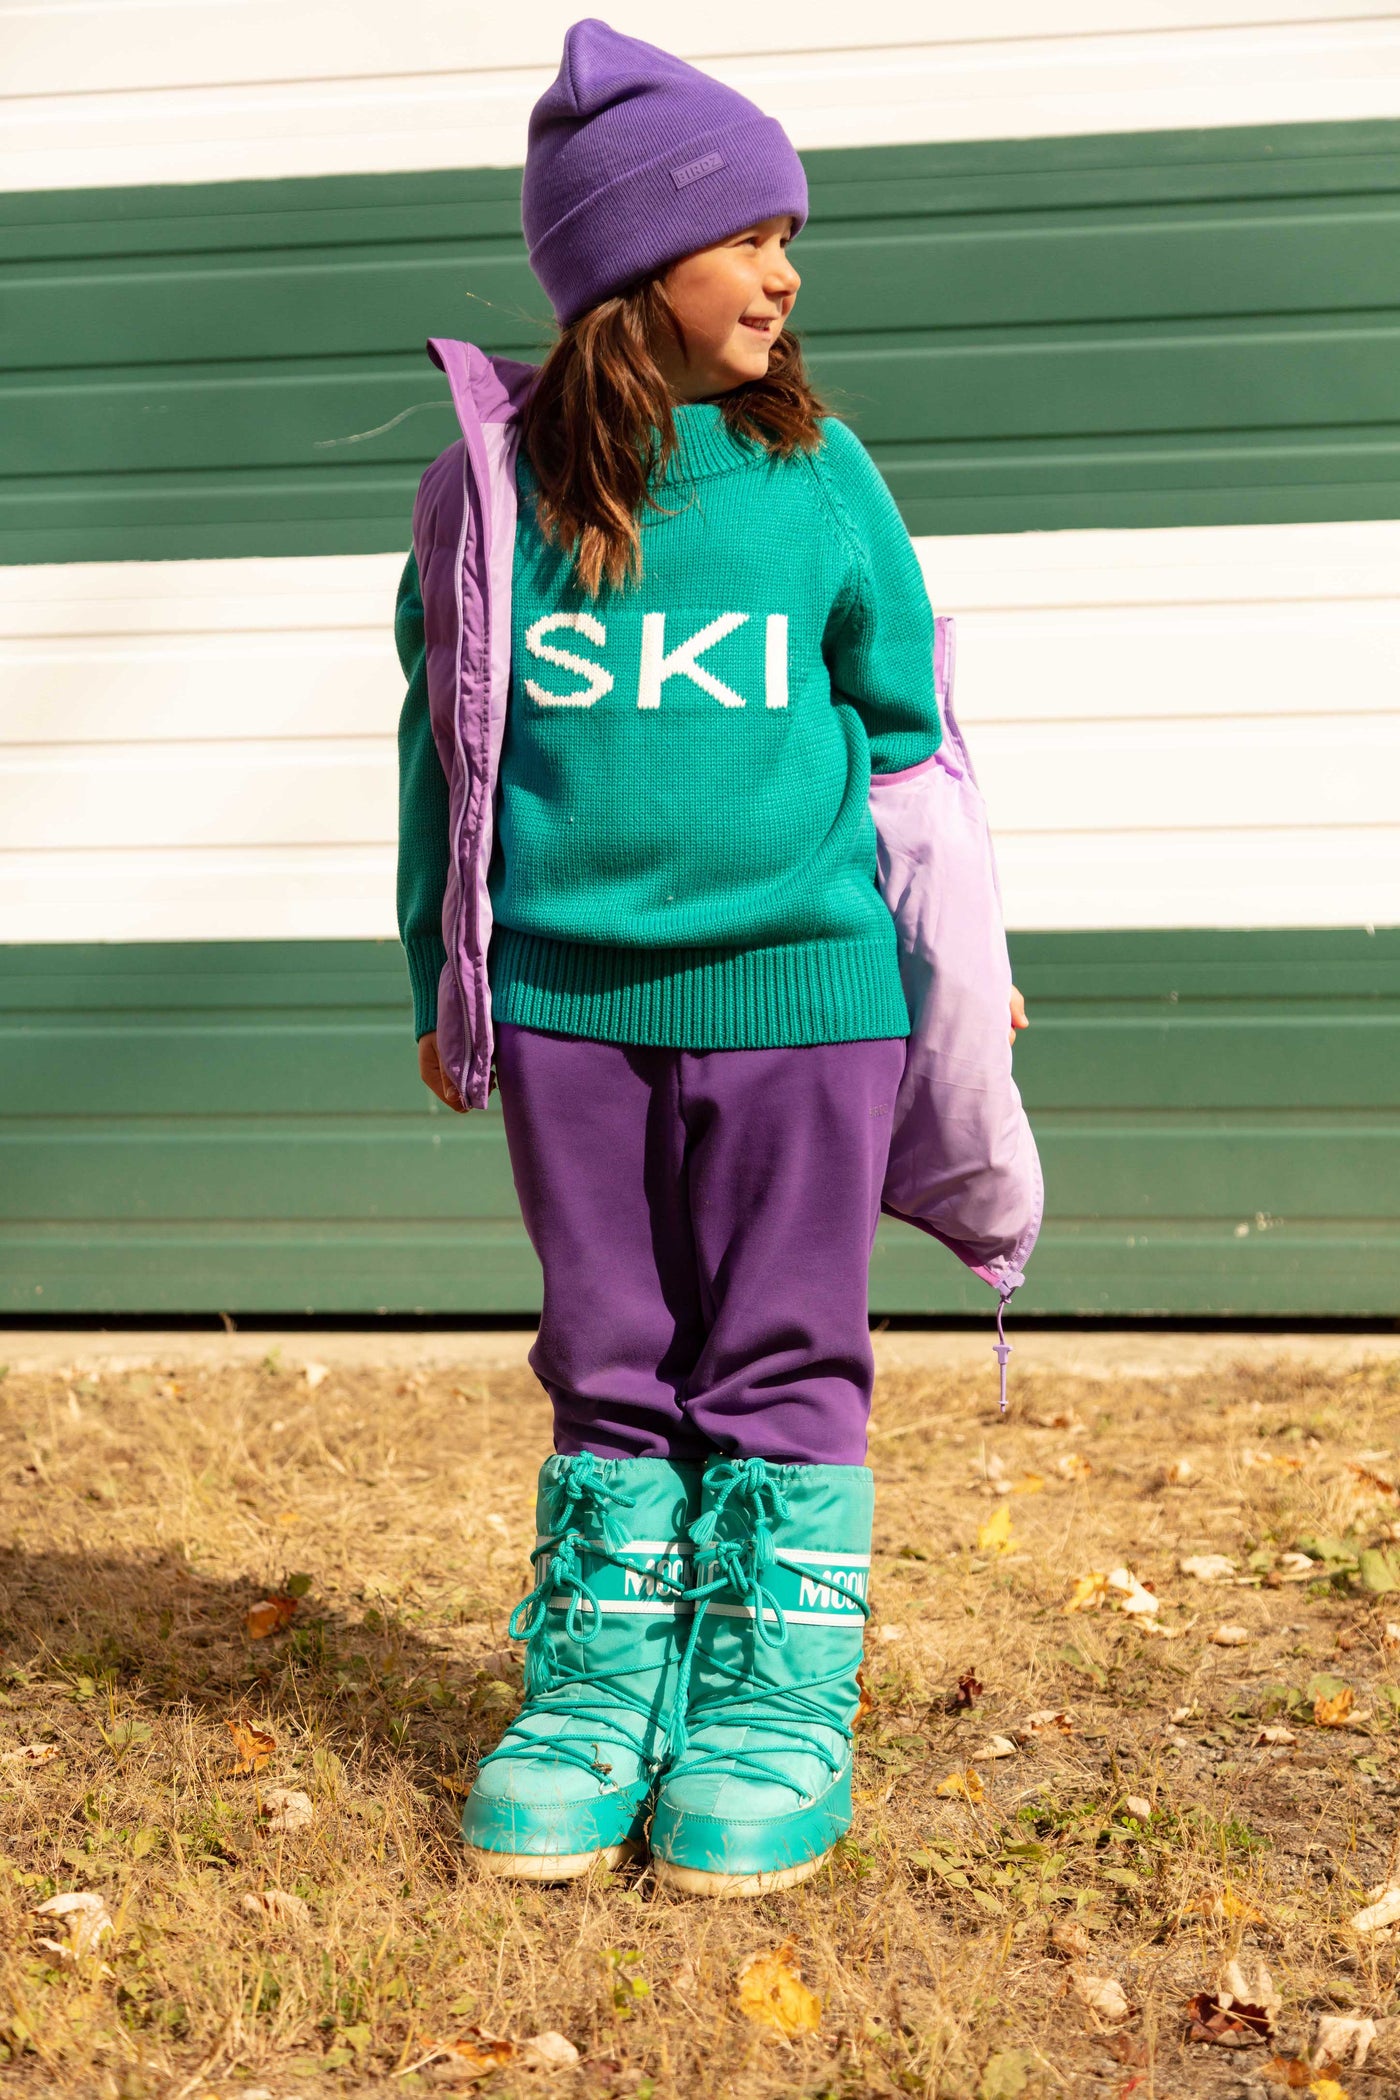 BIRDZ Ski knit |Purple| Kidz